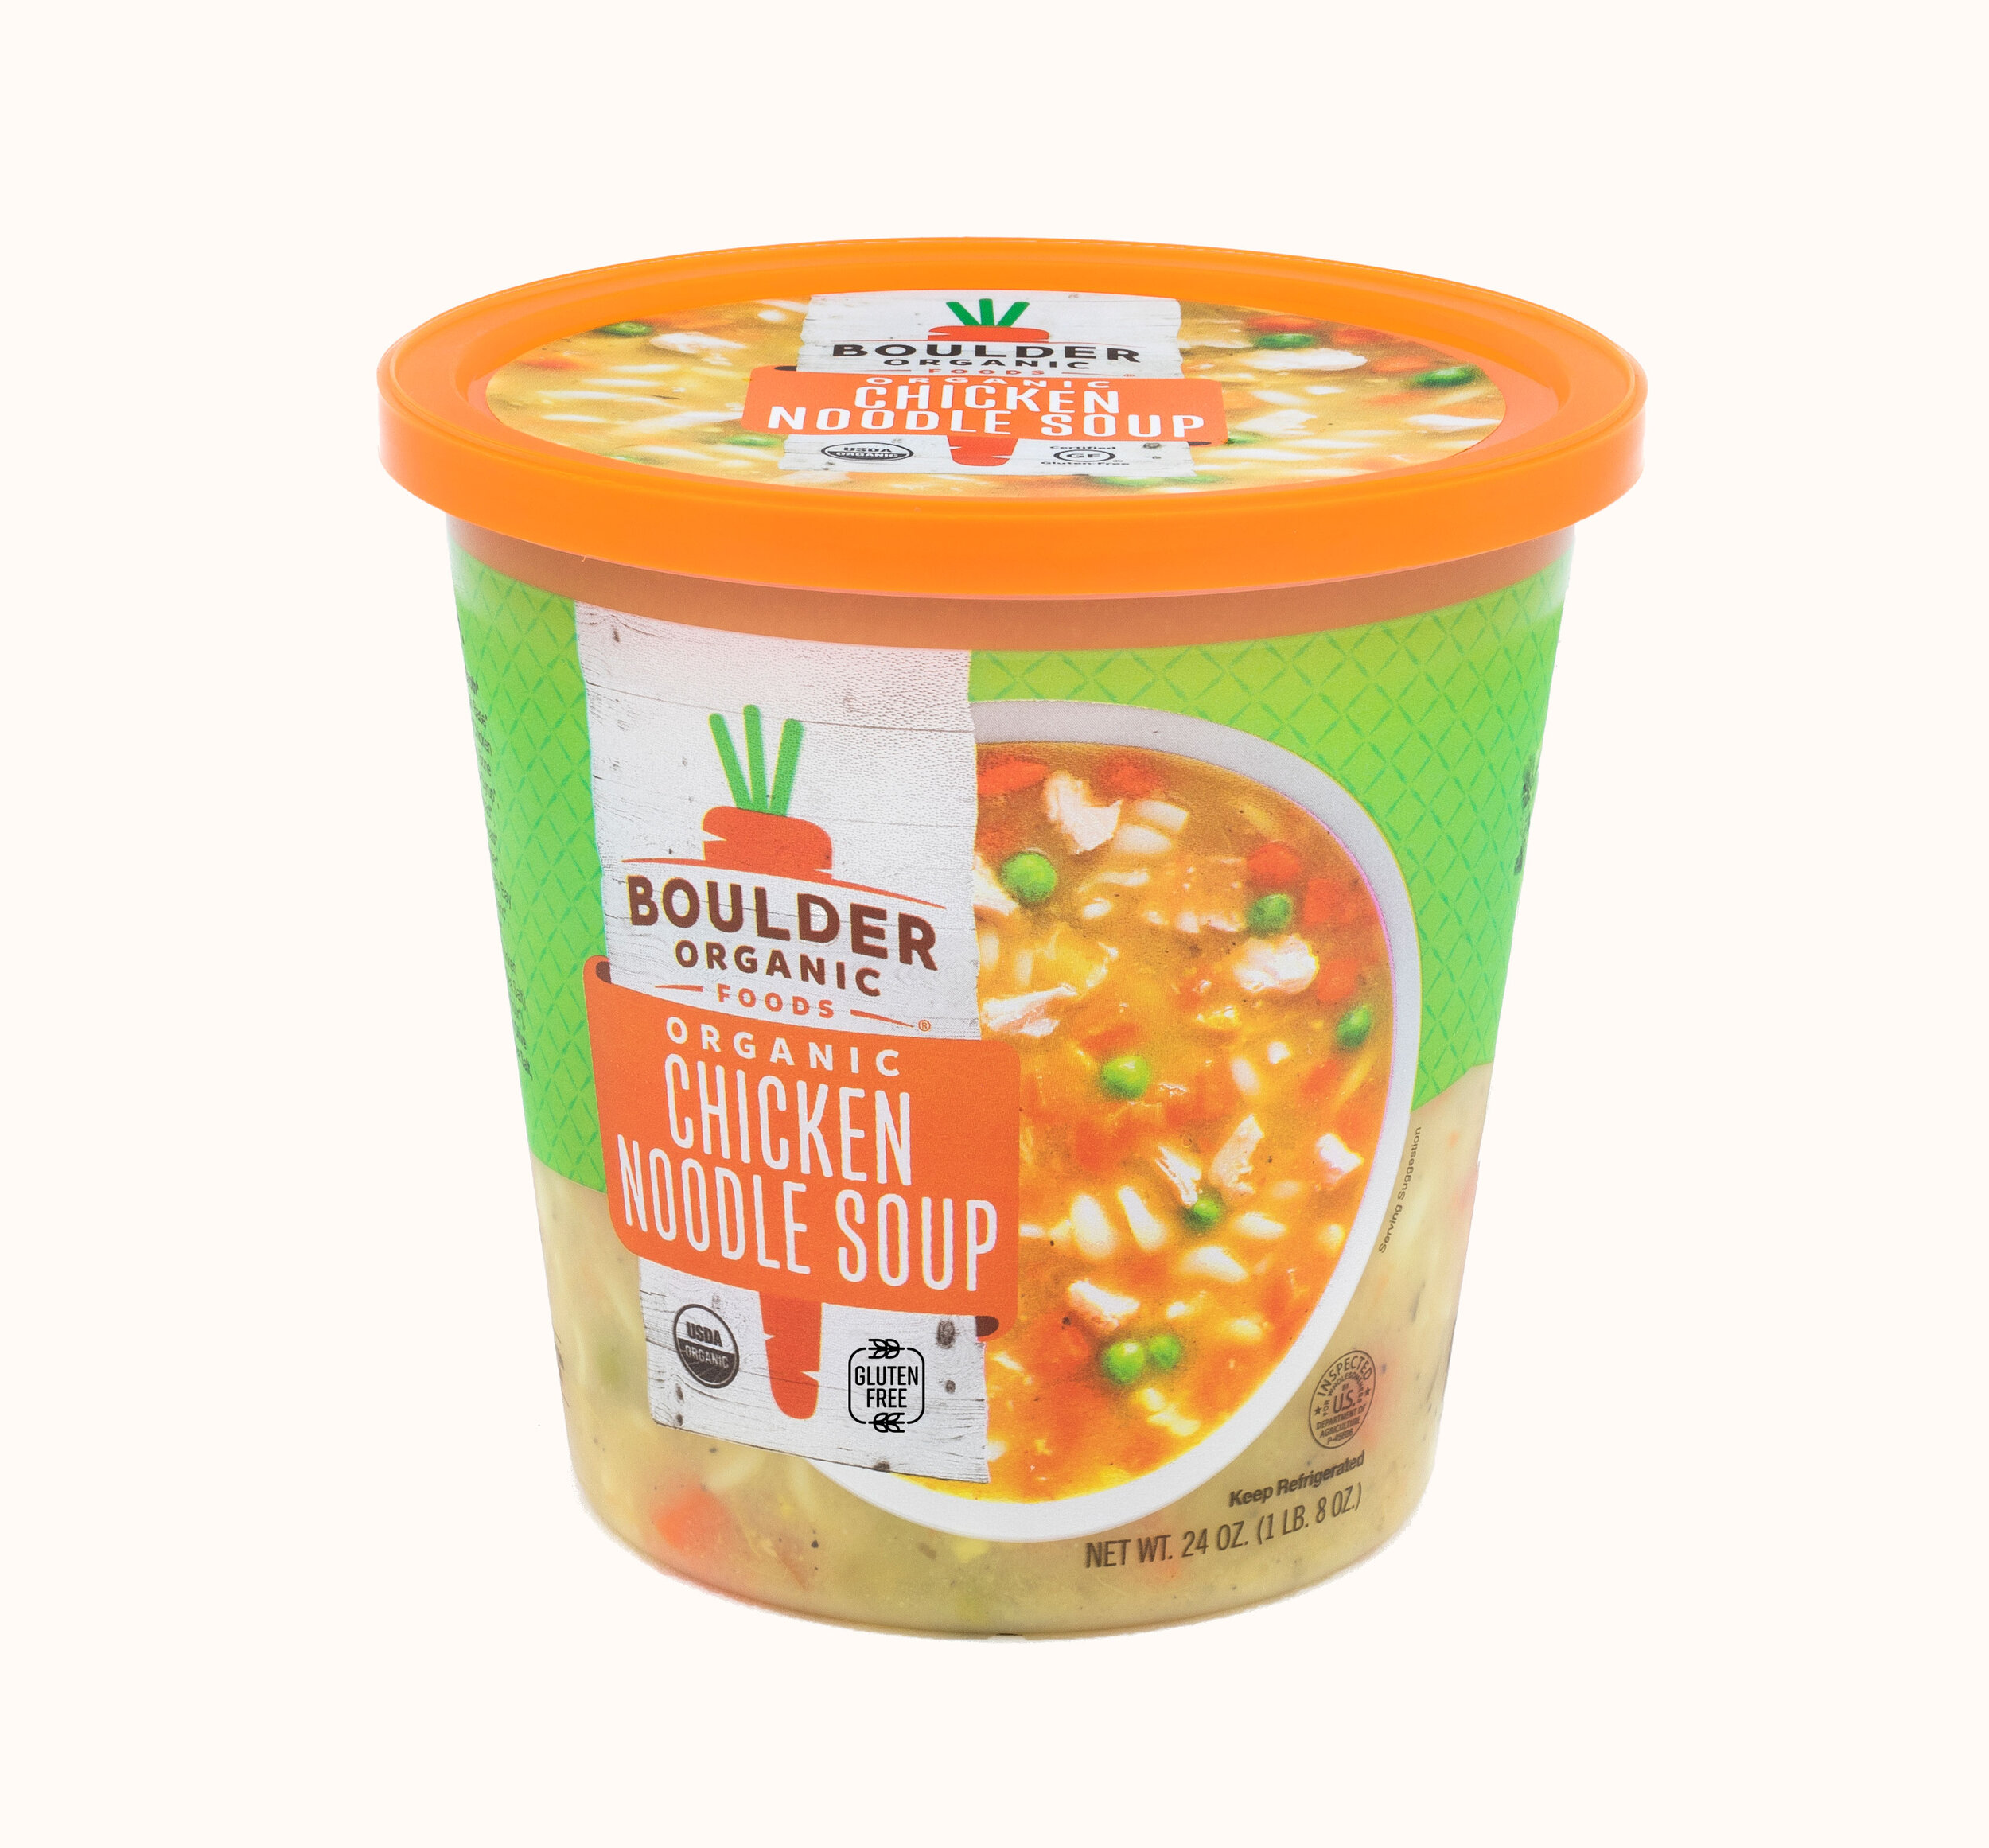 Chicken Noodle Soup - organic chicken, gluten-free noodles in bone